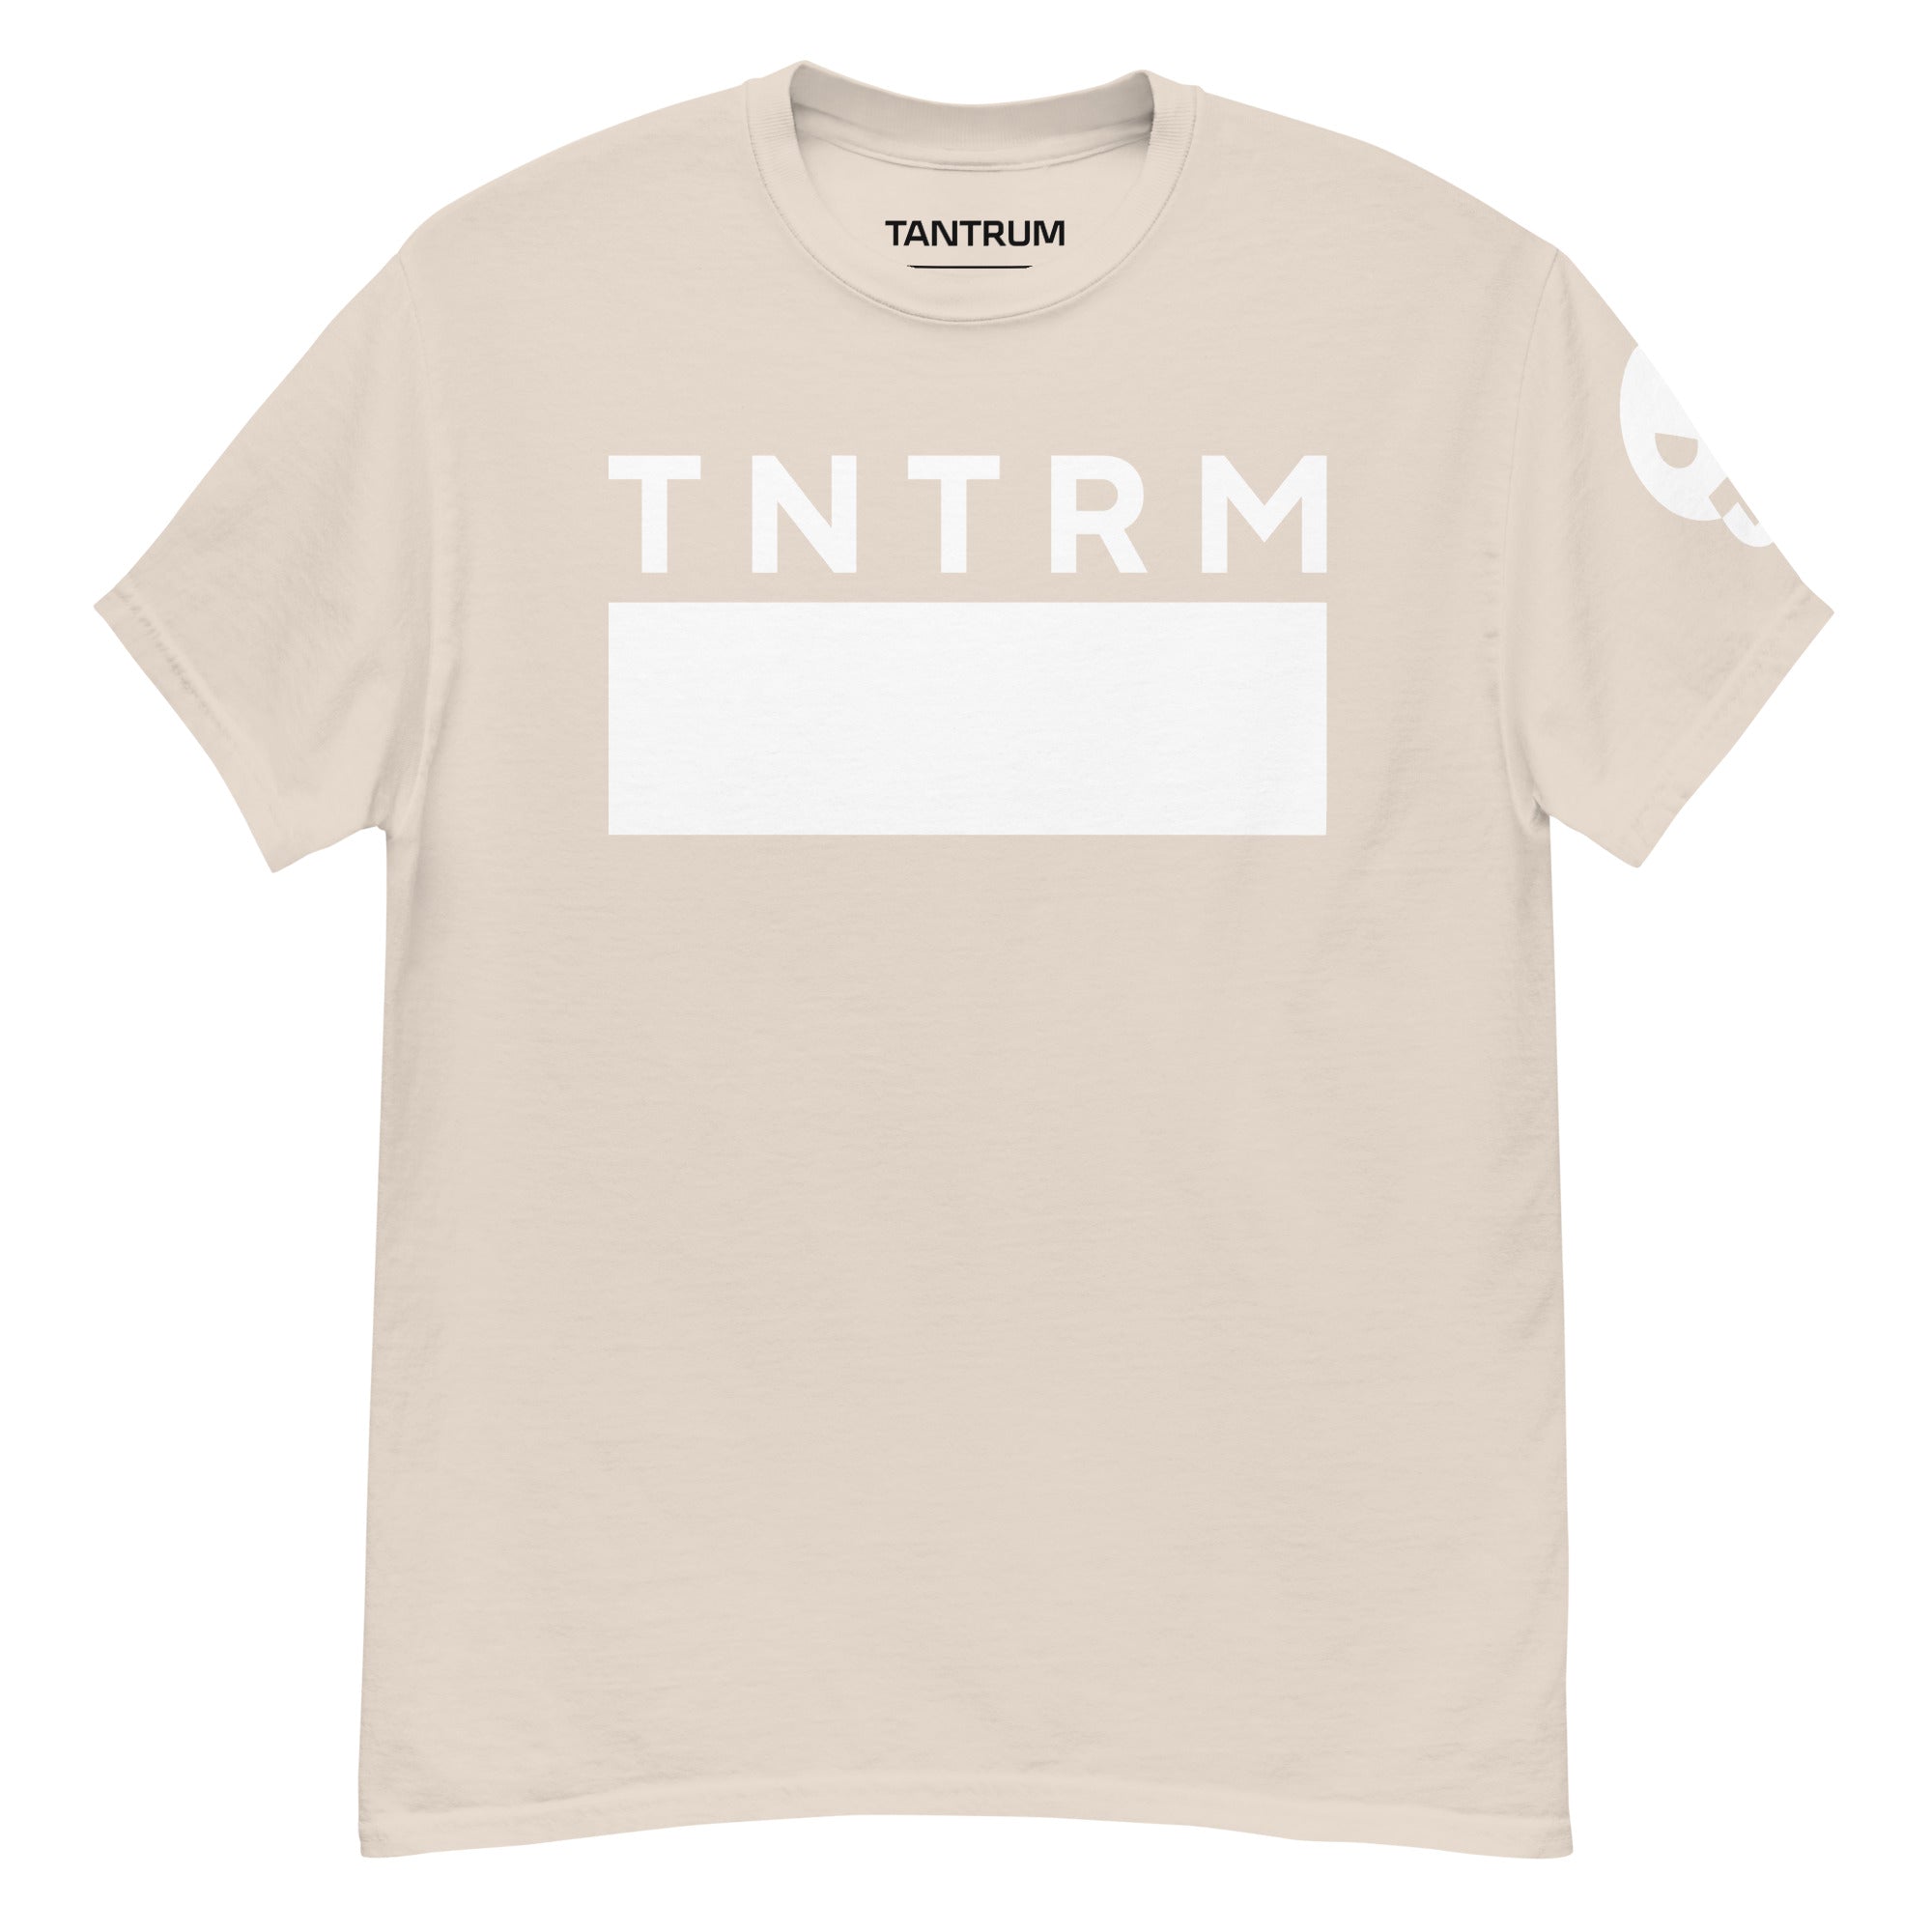 TNTRM T-shirt